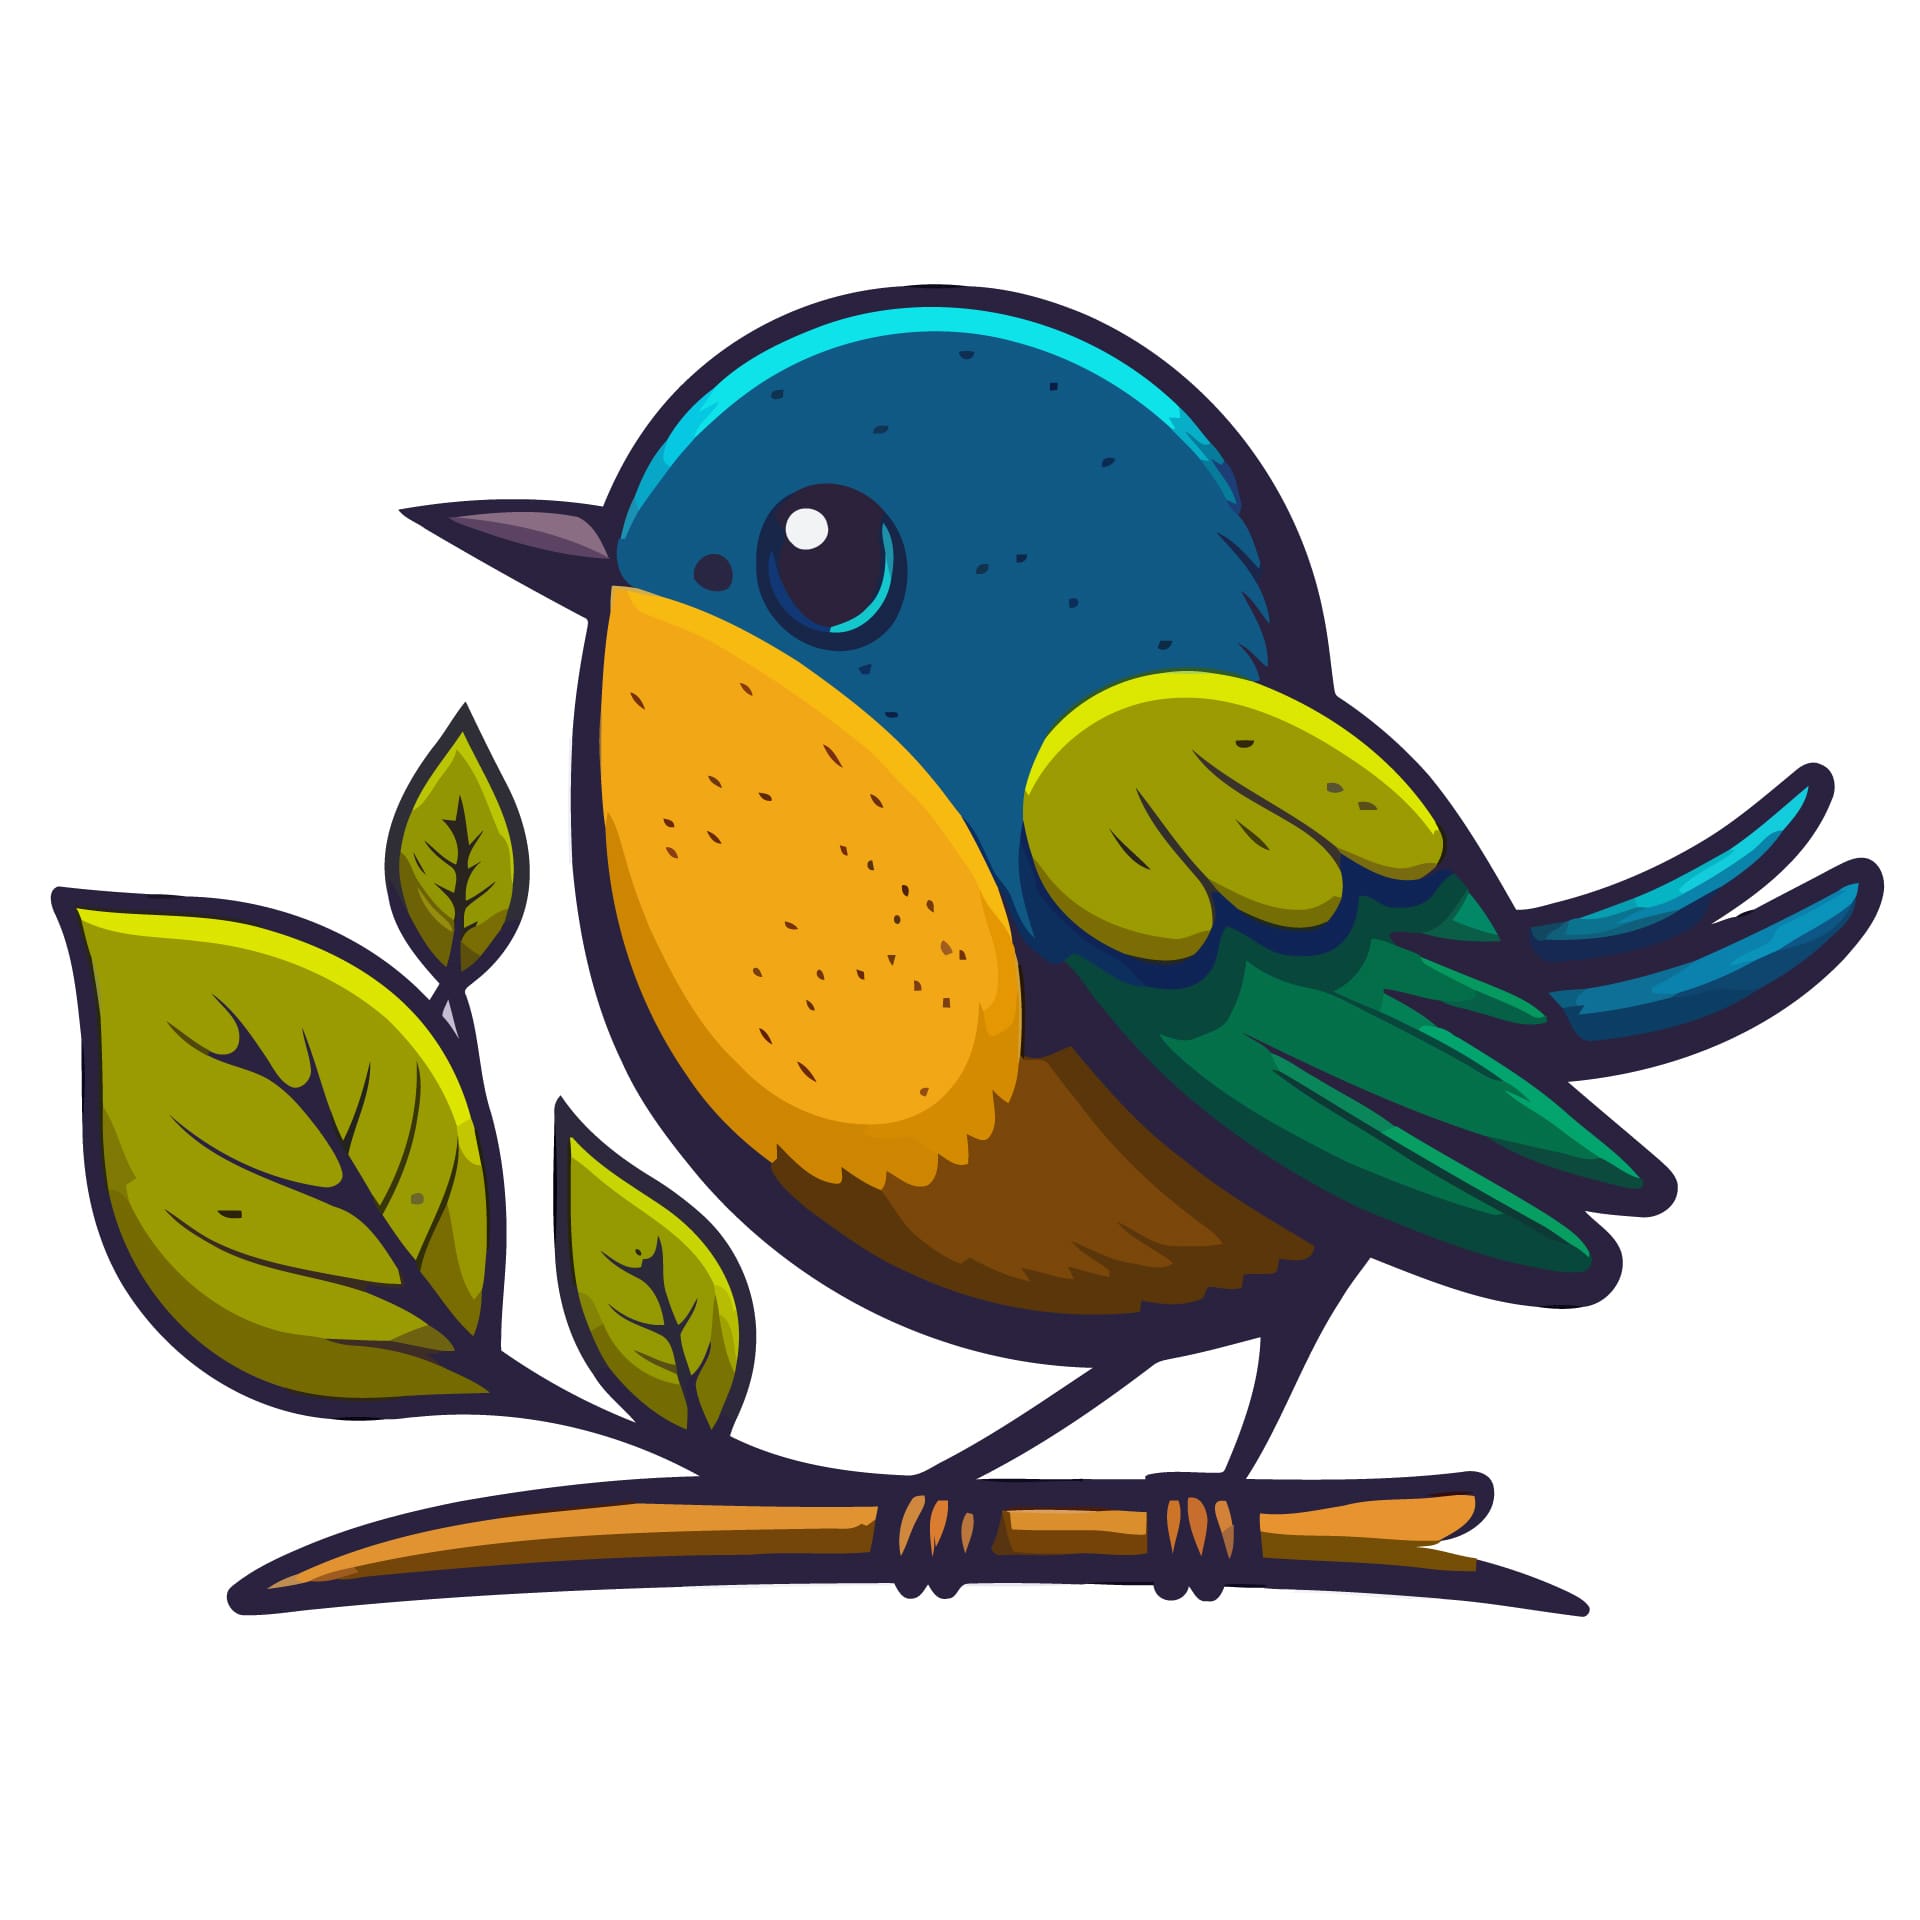 Little bird cartoon animal illustration logo mascot icon excellent image